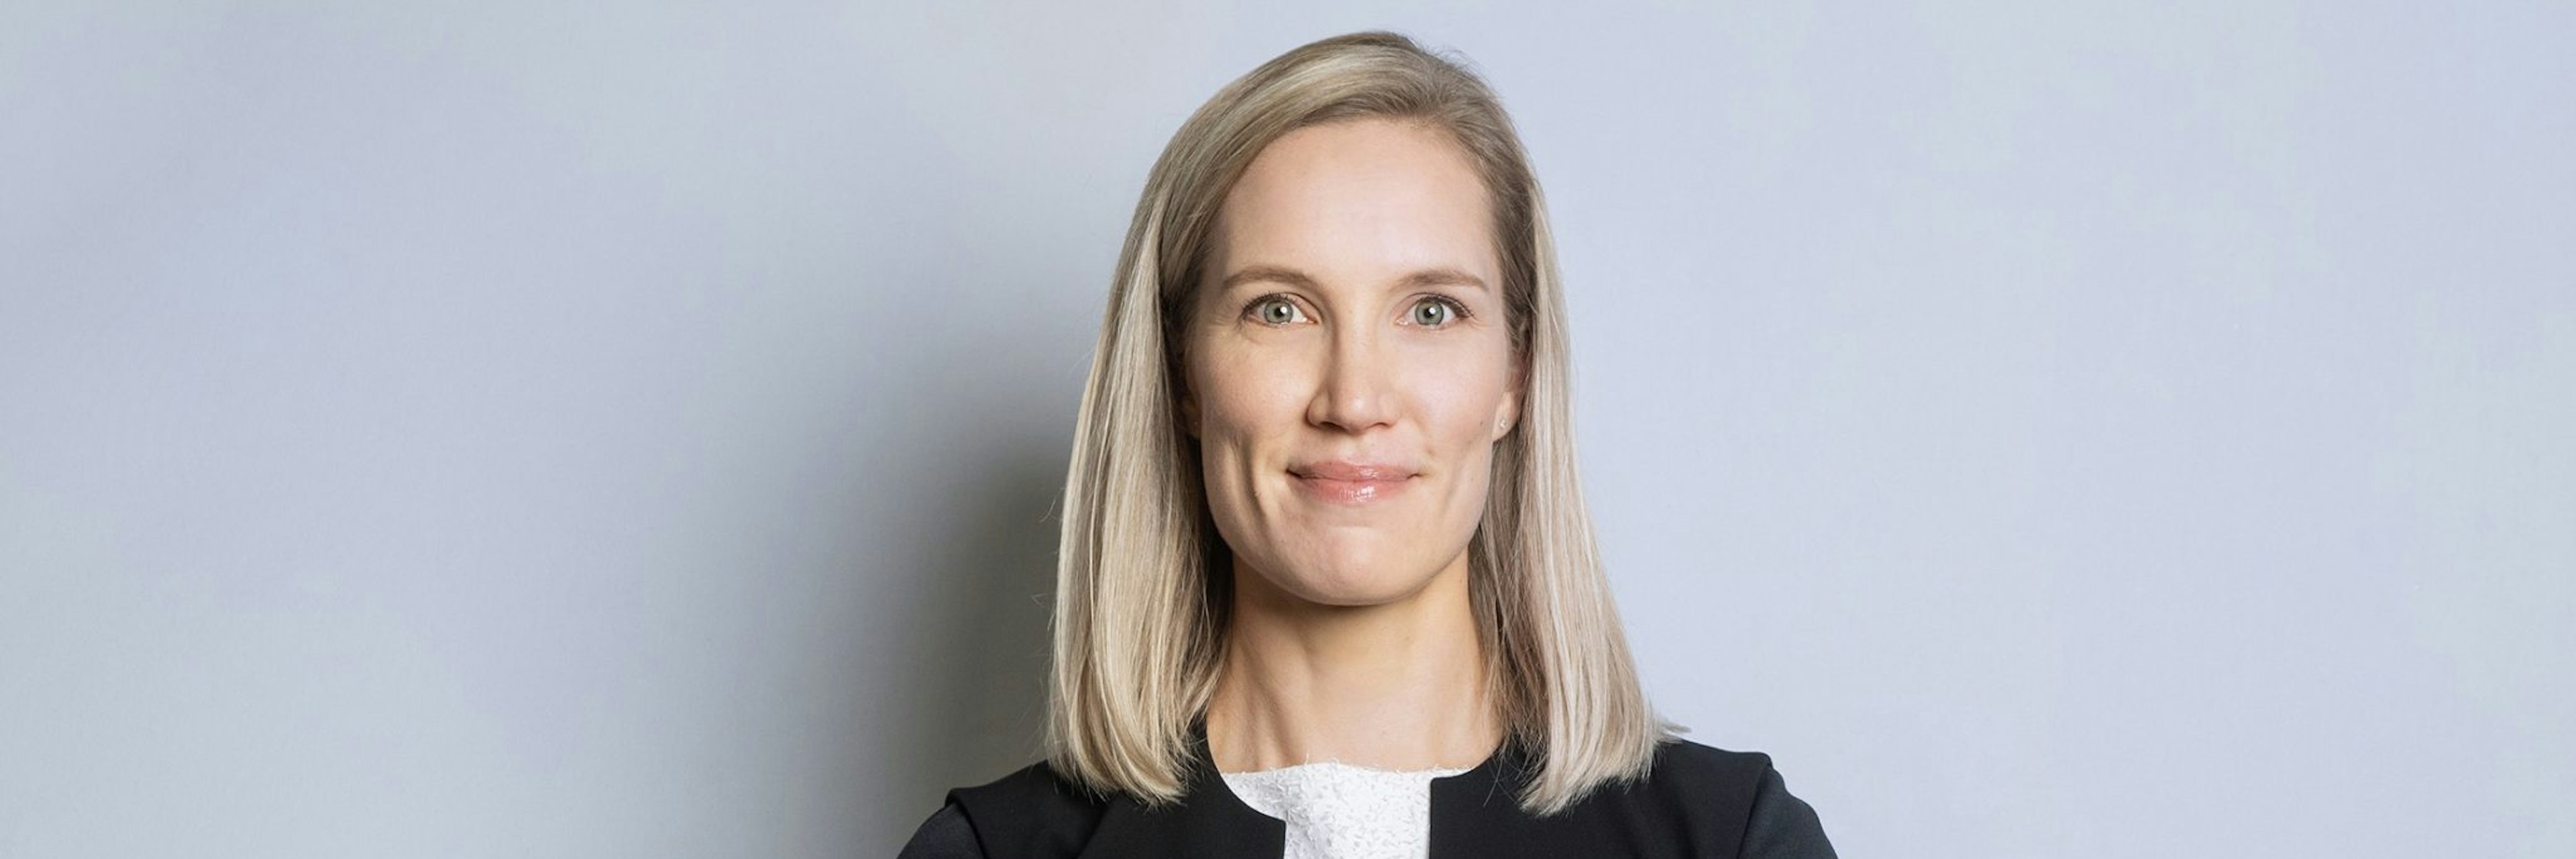 Photo of Elina Kajosaari, CEO of Compensate.